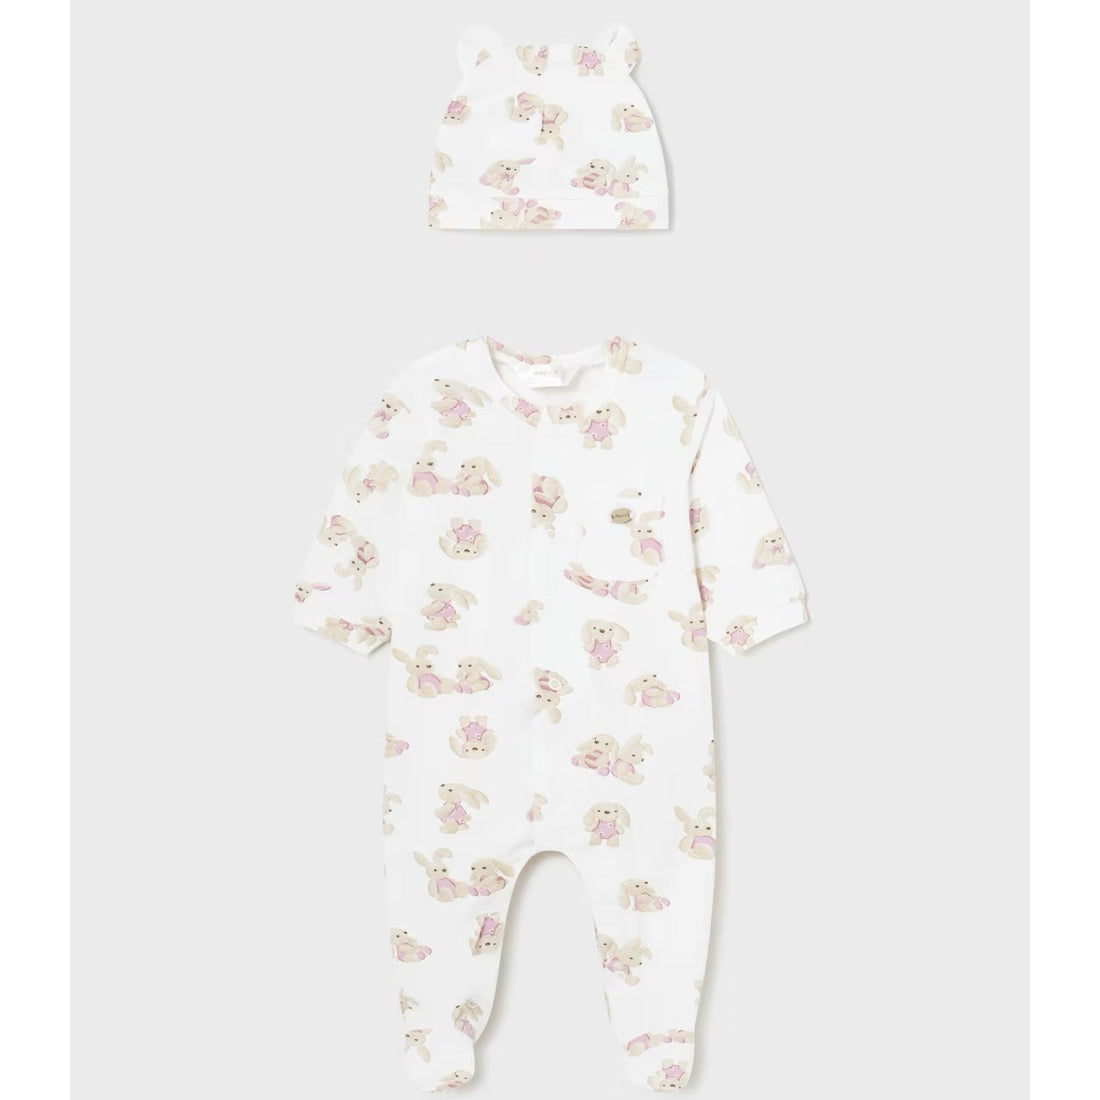 Mayoral Baby Girls Bunny Sleepsuit Set 1721 Pink Clothing 0-1M / White,1-2M / White,2-4M / White,4-6M / White,6-9M / White